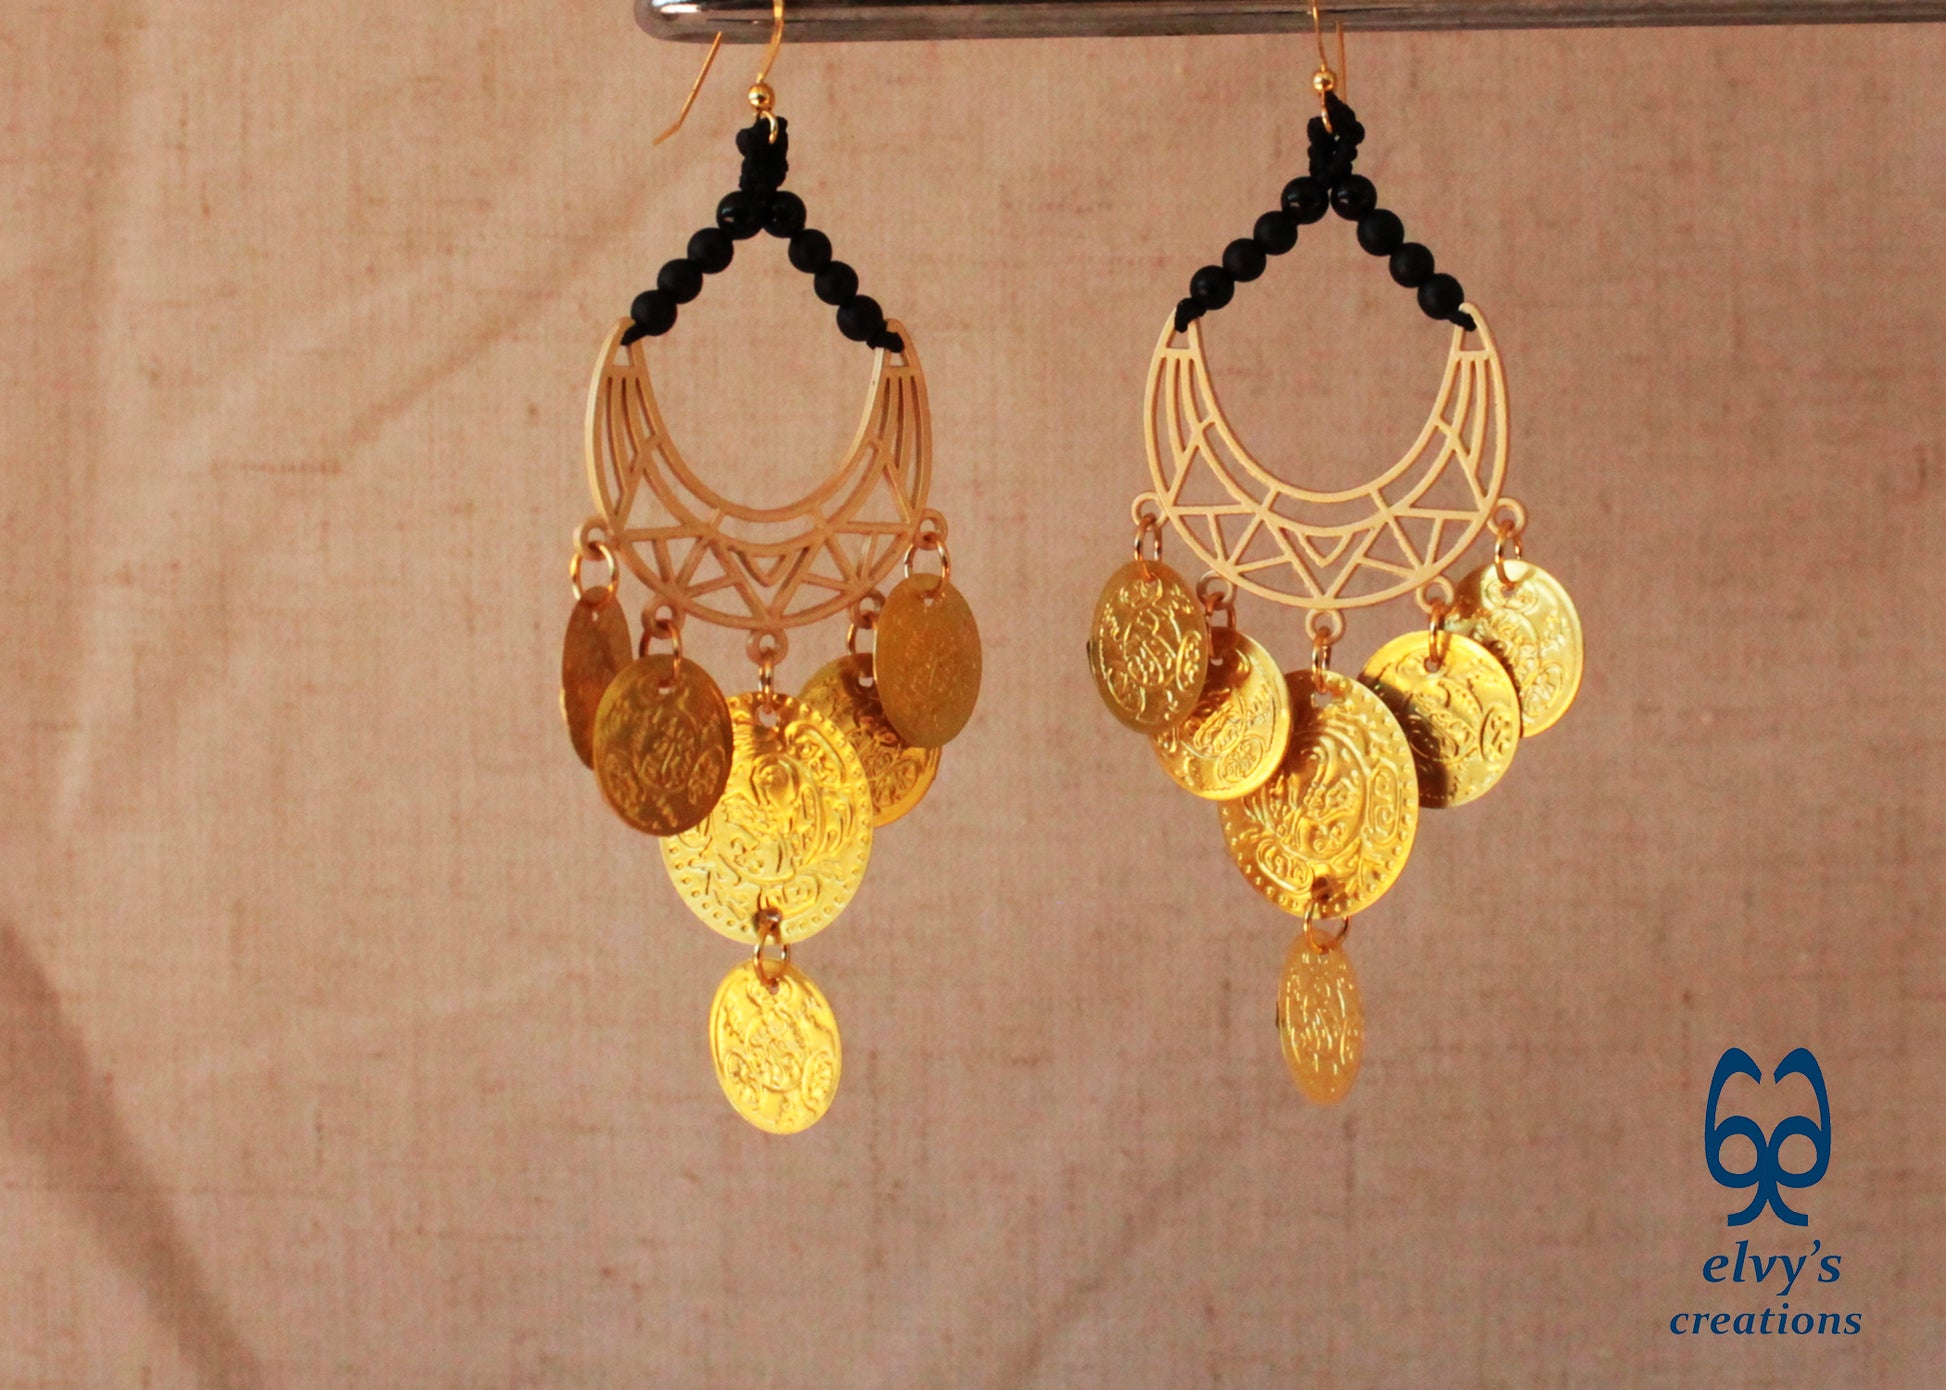 Gold Macrame Earrings with Onyx Gemstones Gypsy Earrings with Coins Boho Dangle with Coins, Μακραμέ Σκουλαρίκια με Χρυσά Φλουριά και Κρυστάλλους Όνυχα